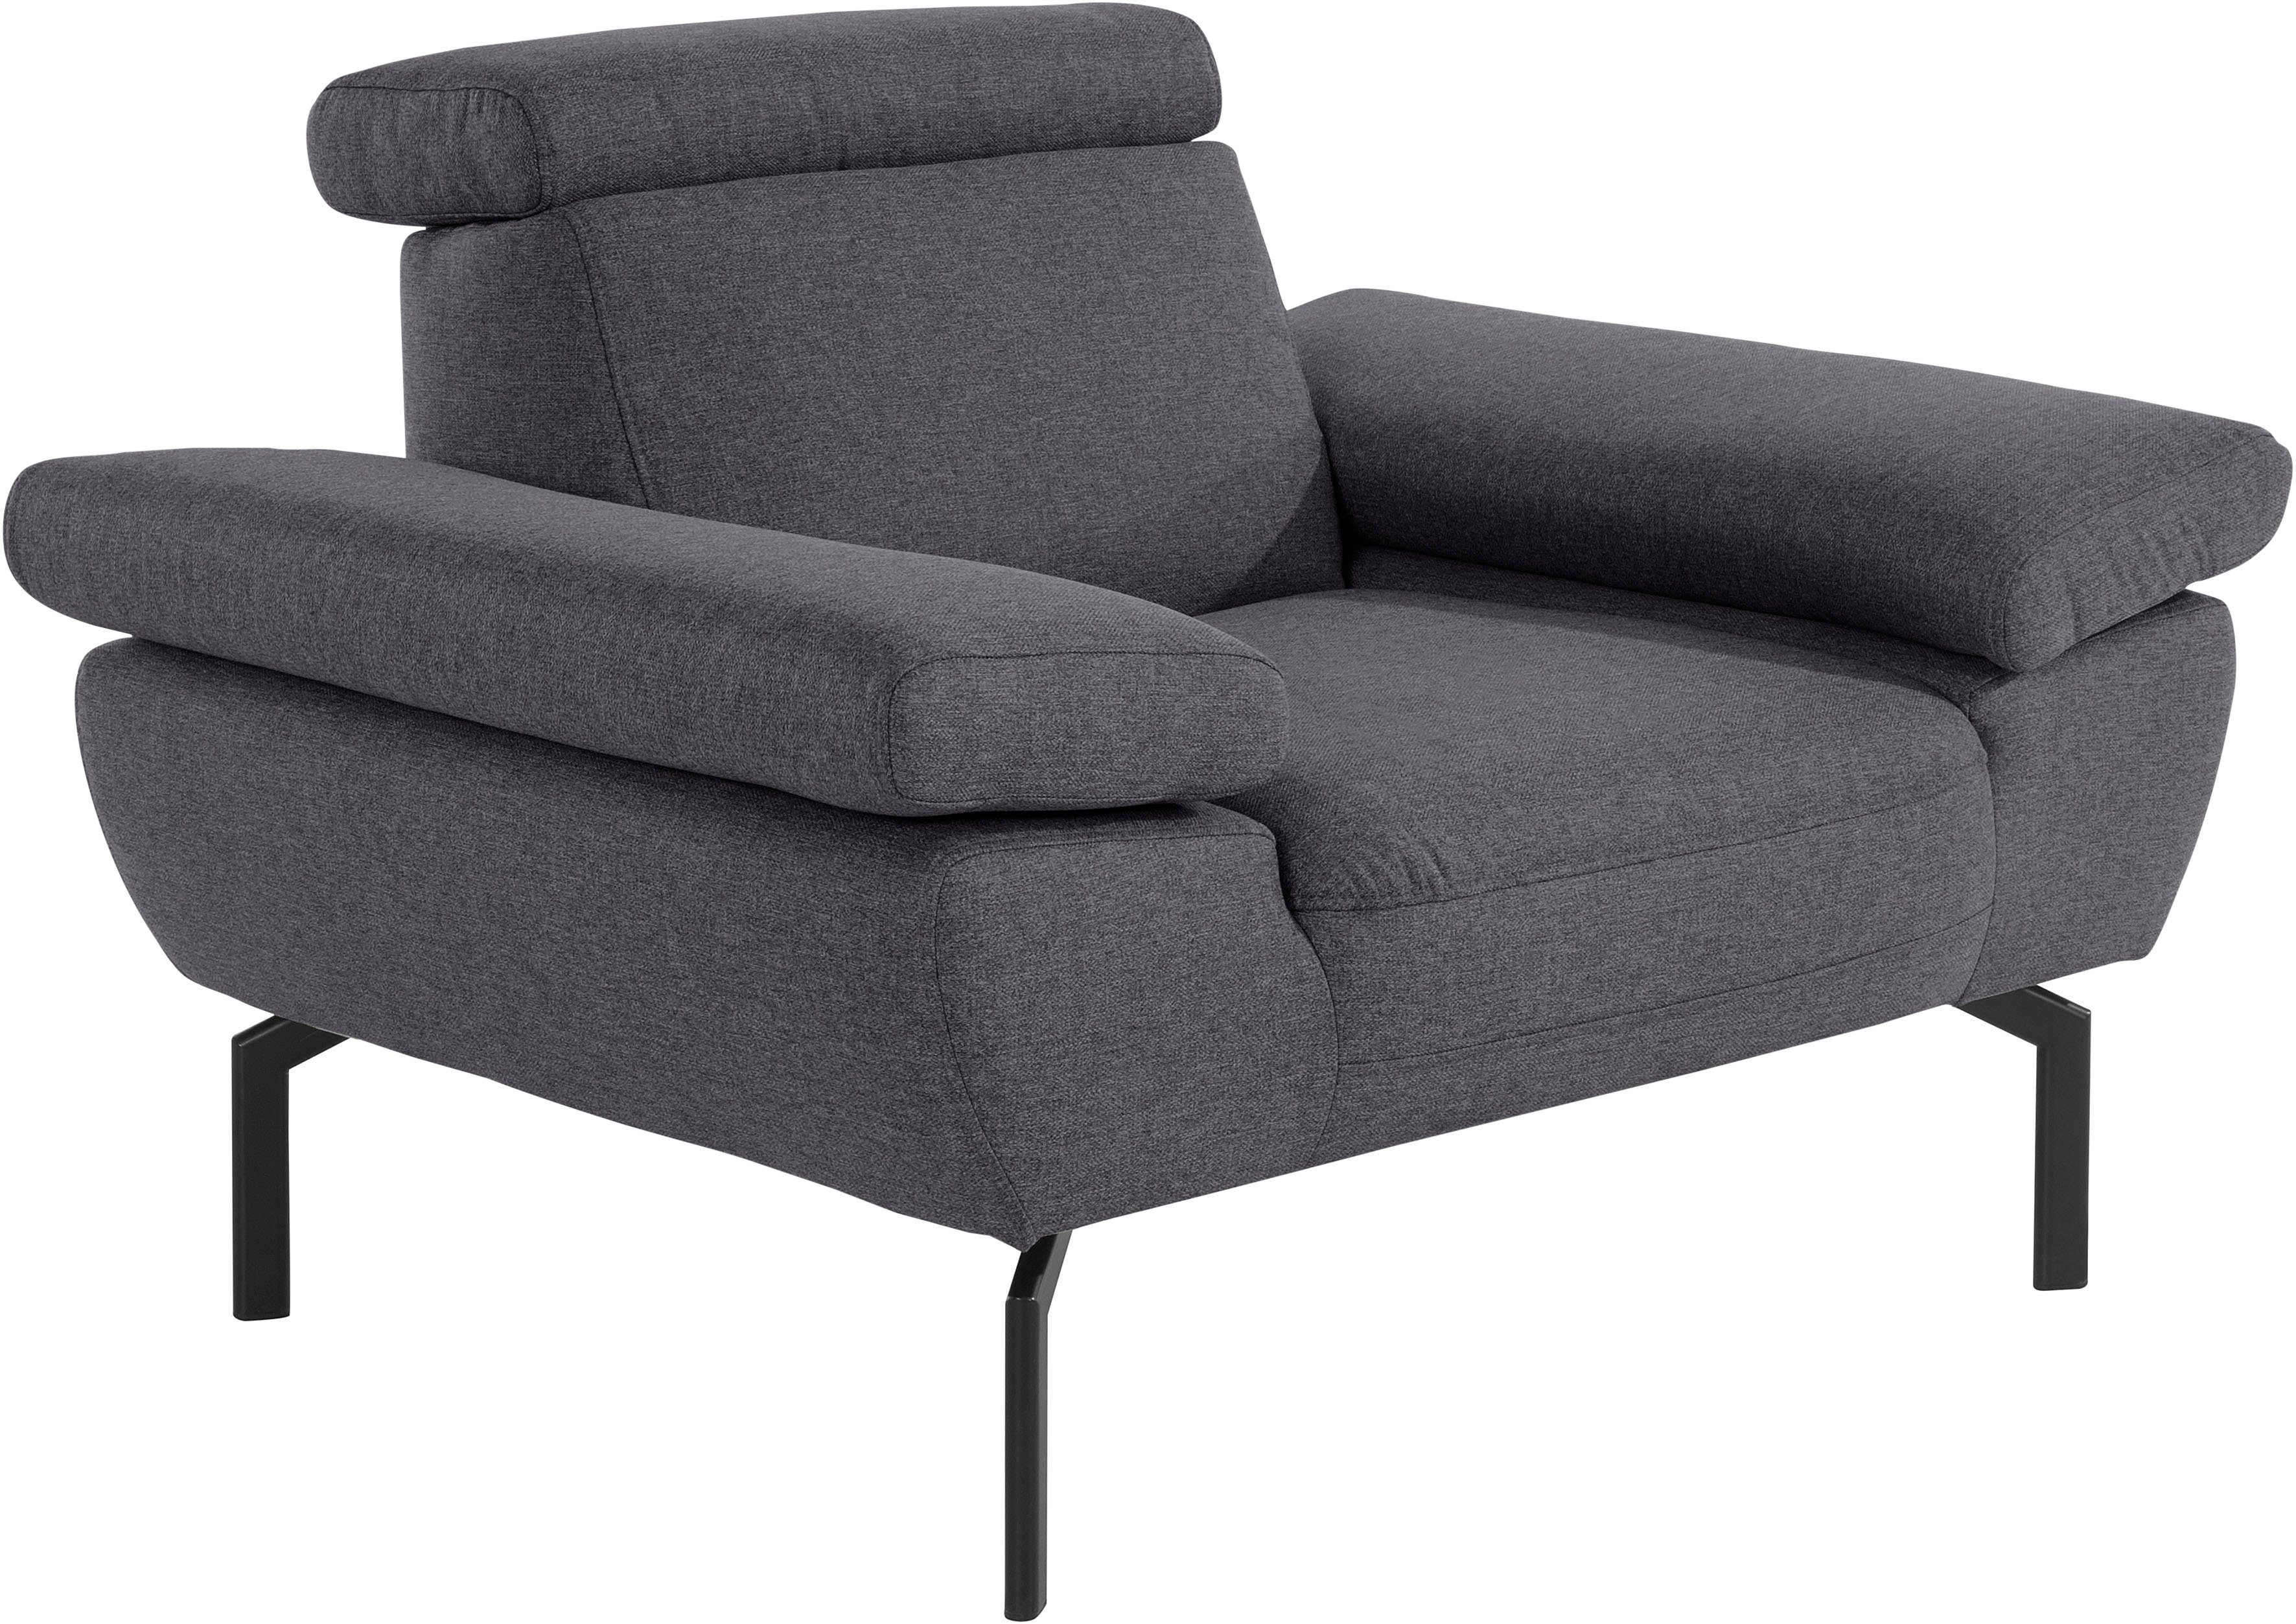 Style of Sessel mit wahlweise in Lederoptik Luxus-Microfaser Rückenverstellung, Places Luxus, Trapino